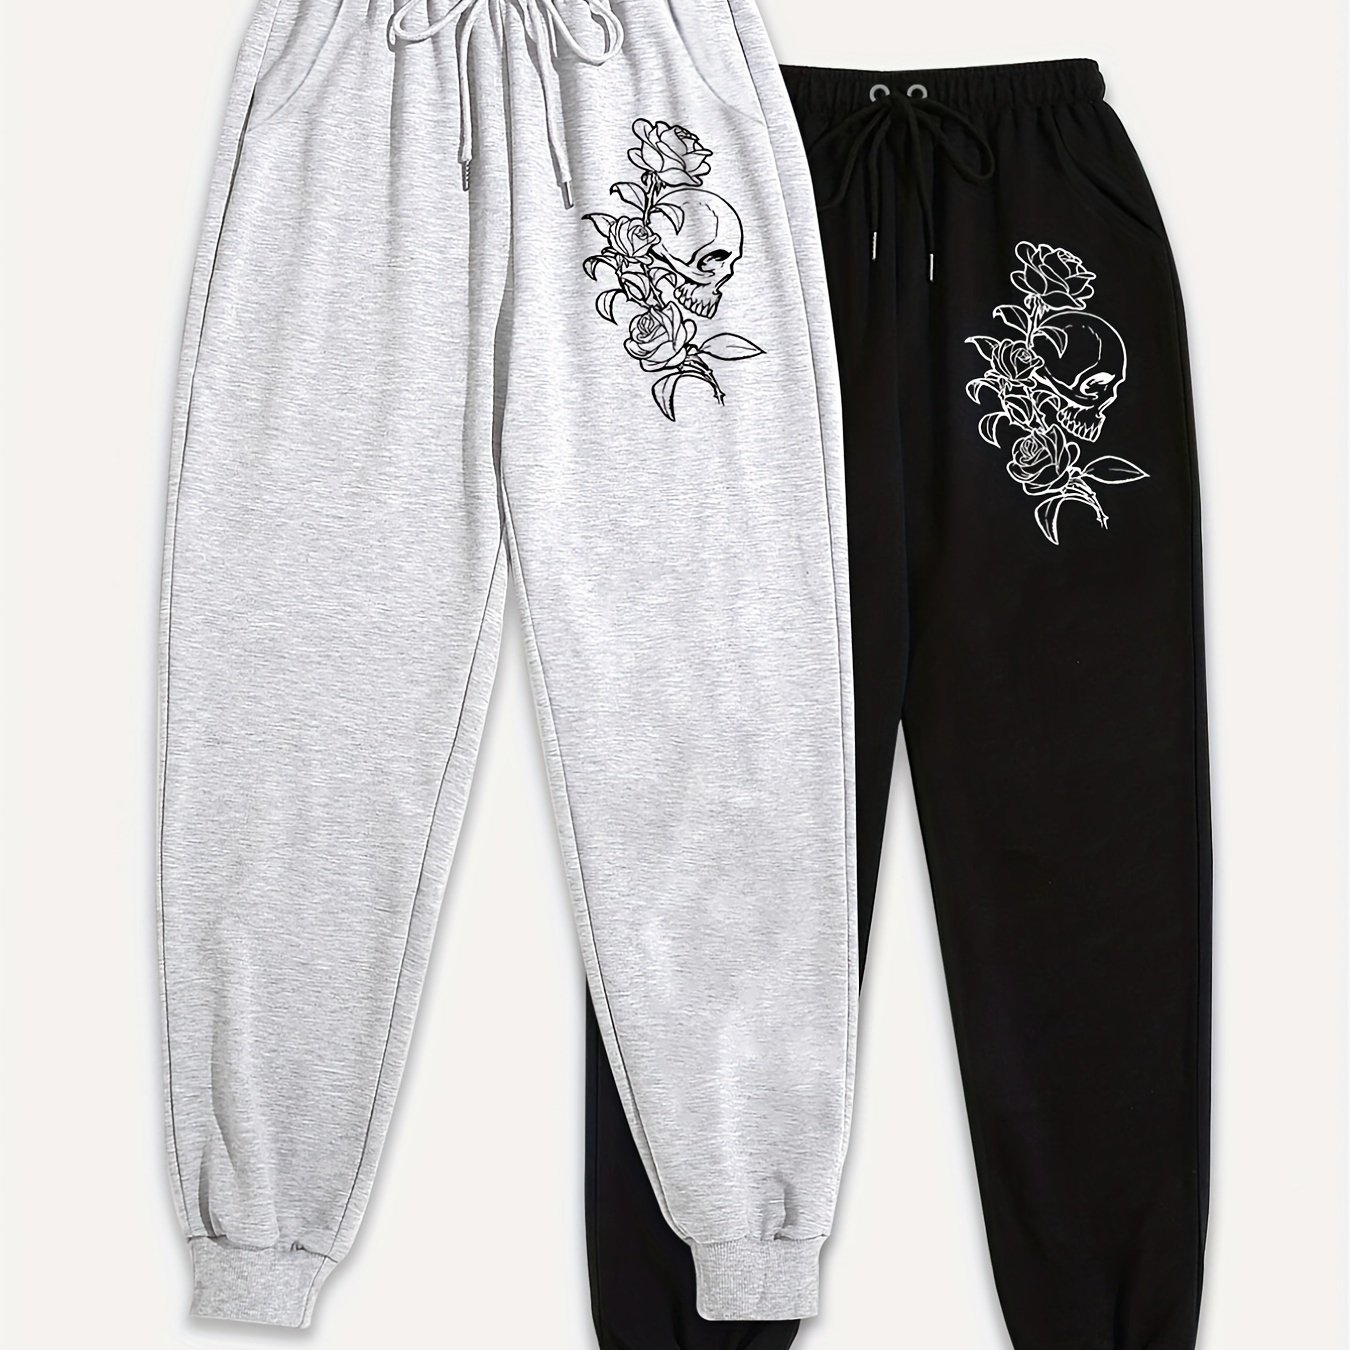 

Floral Skull Print Sweatpants 2 Pack, Drawstring Waist Comfy Casual Jogger Pants, Women's Clothing